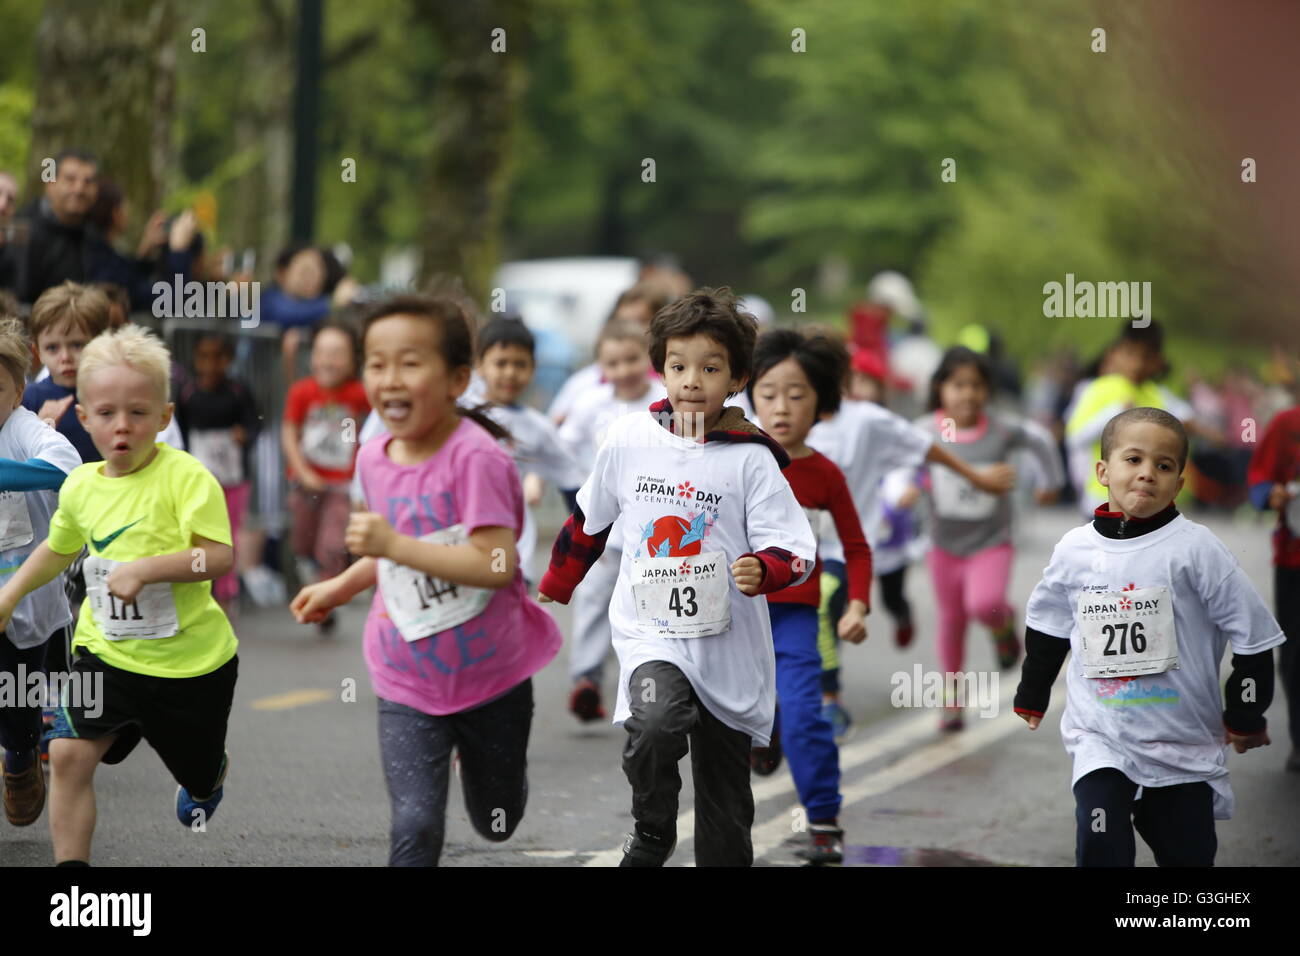 finish line for kids